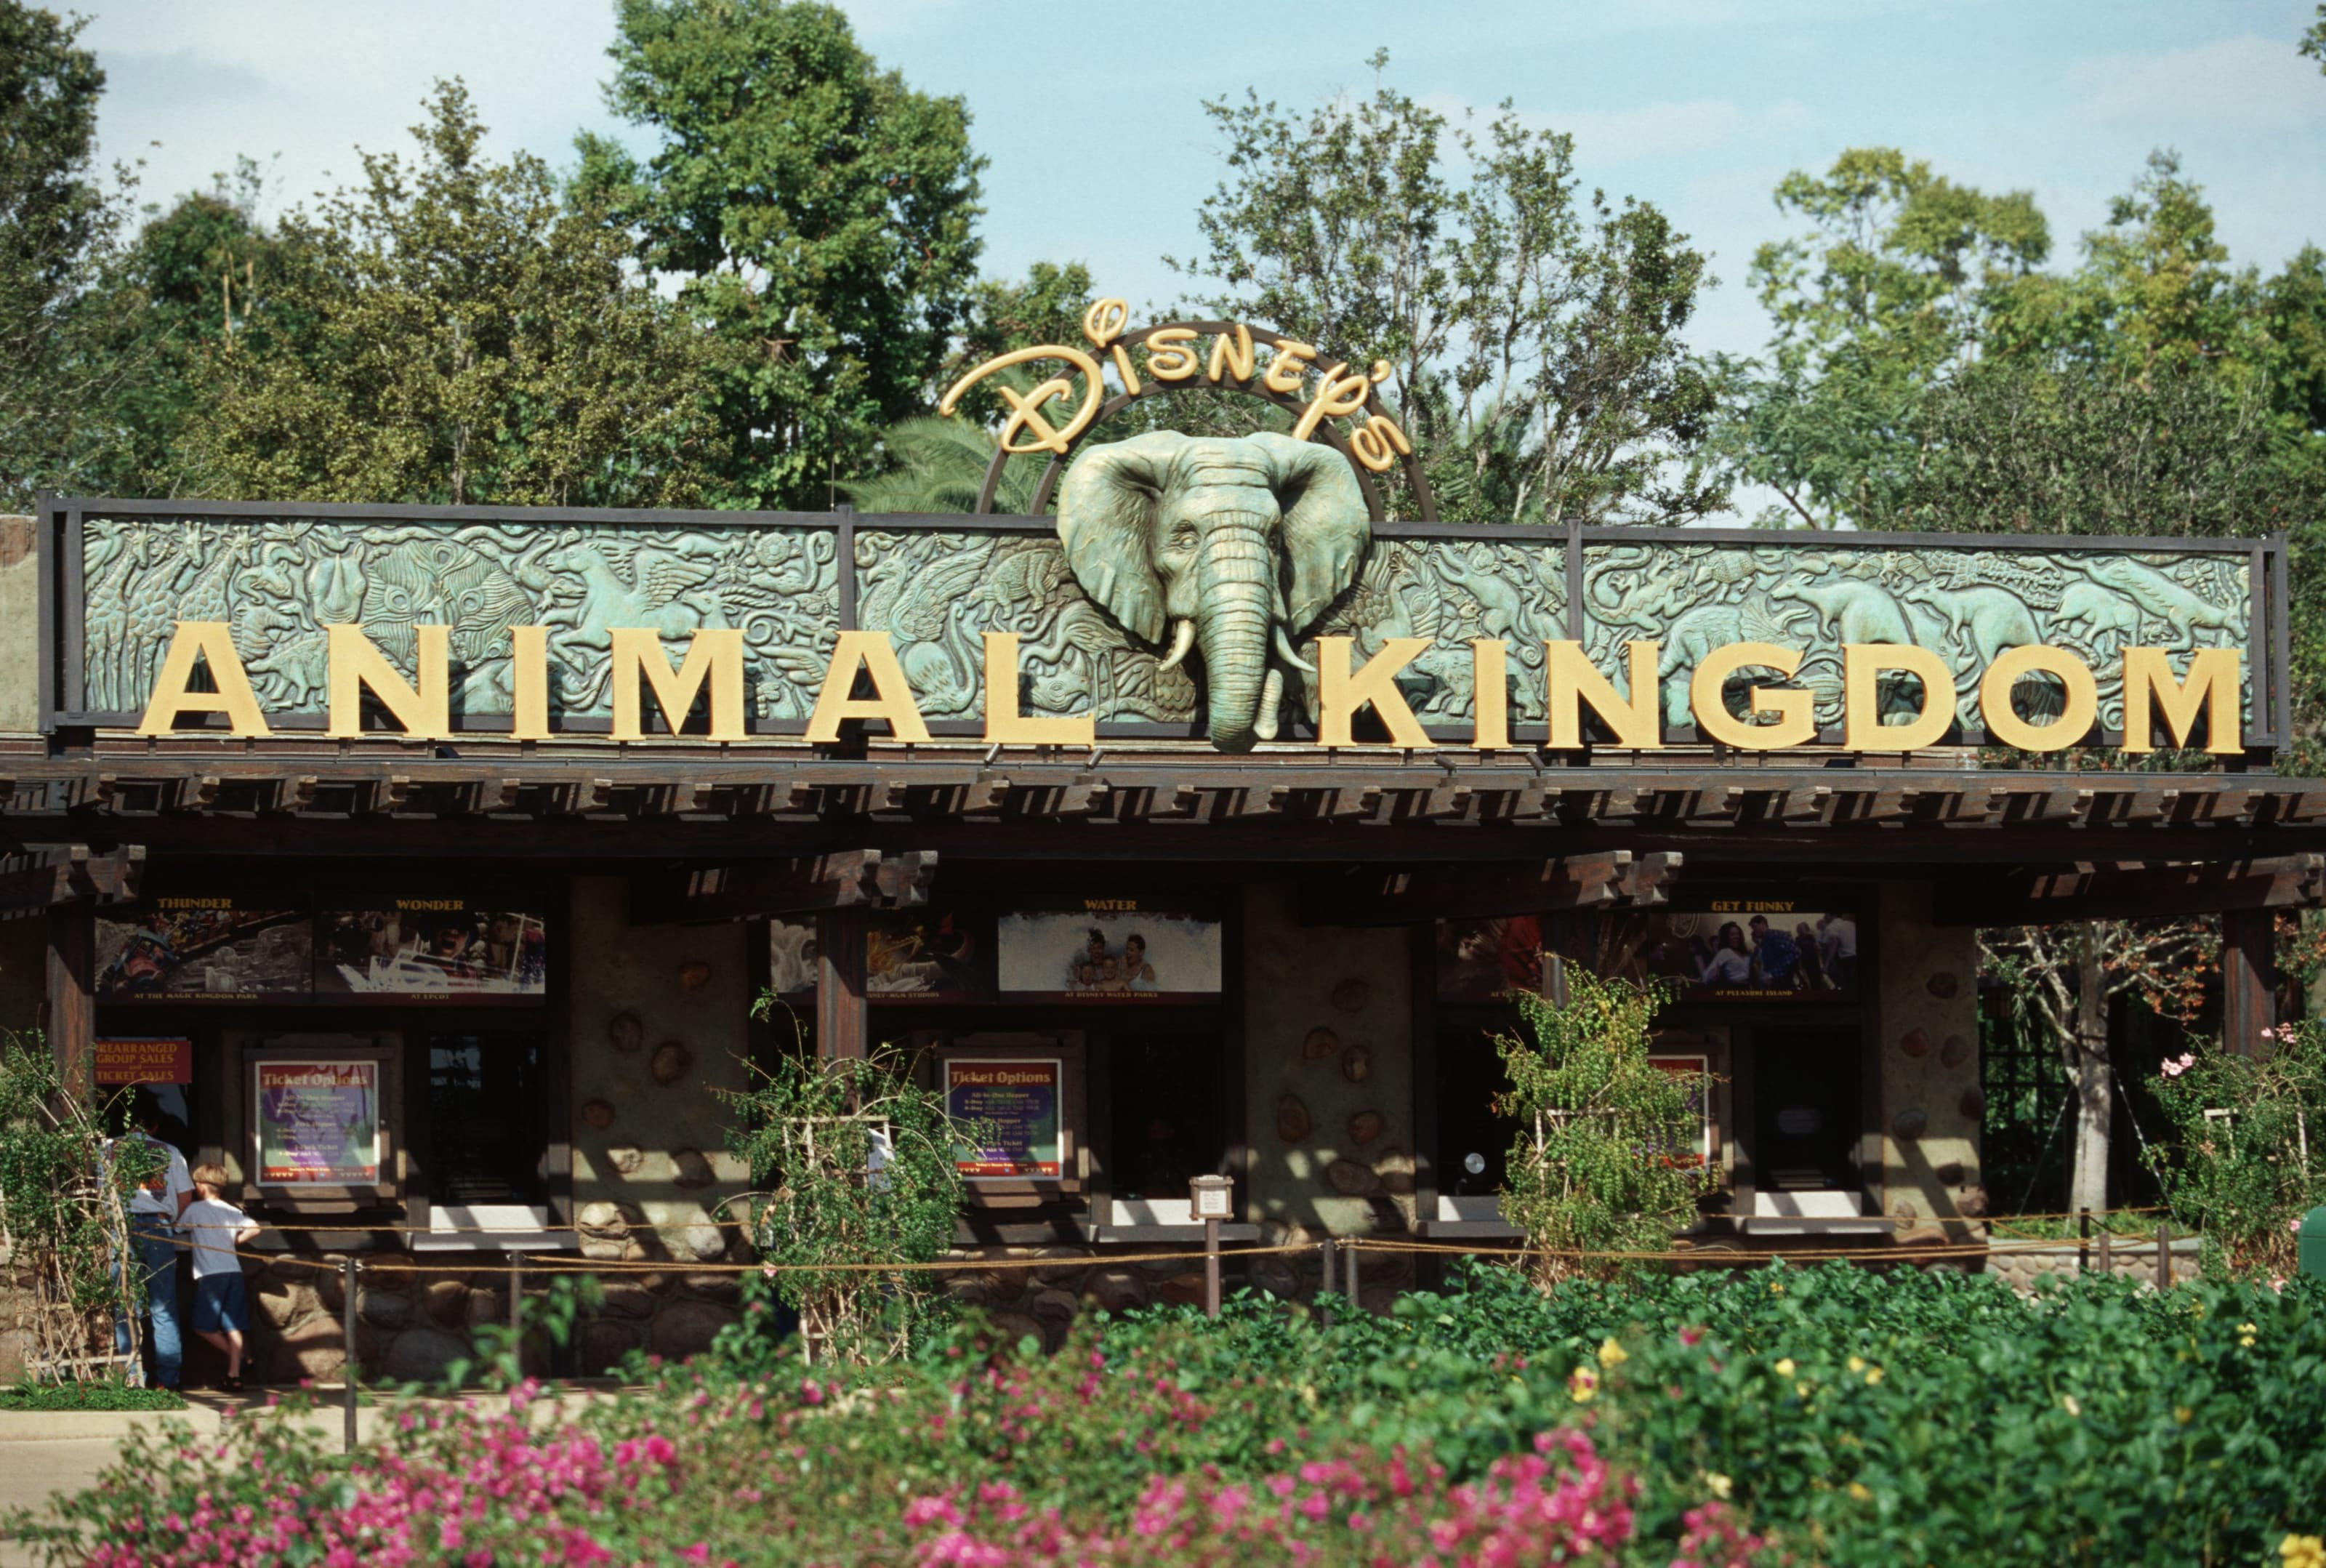 The front entrance of Disney’s Animal Kingdom theme park